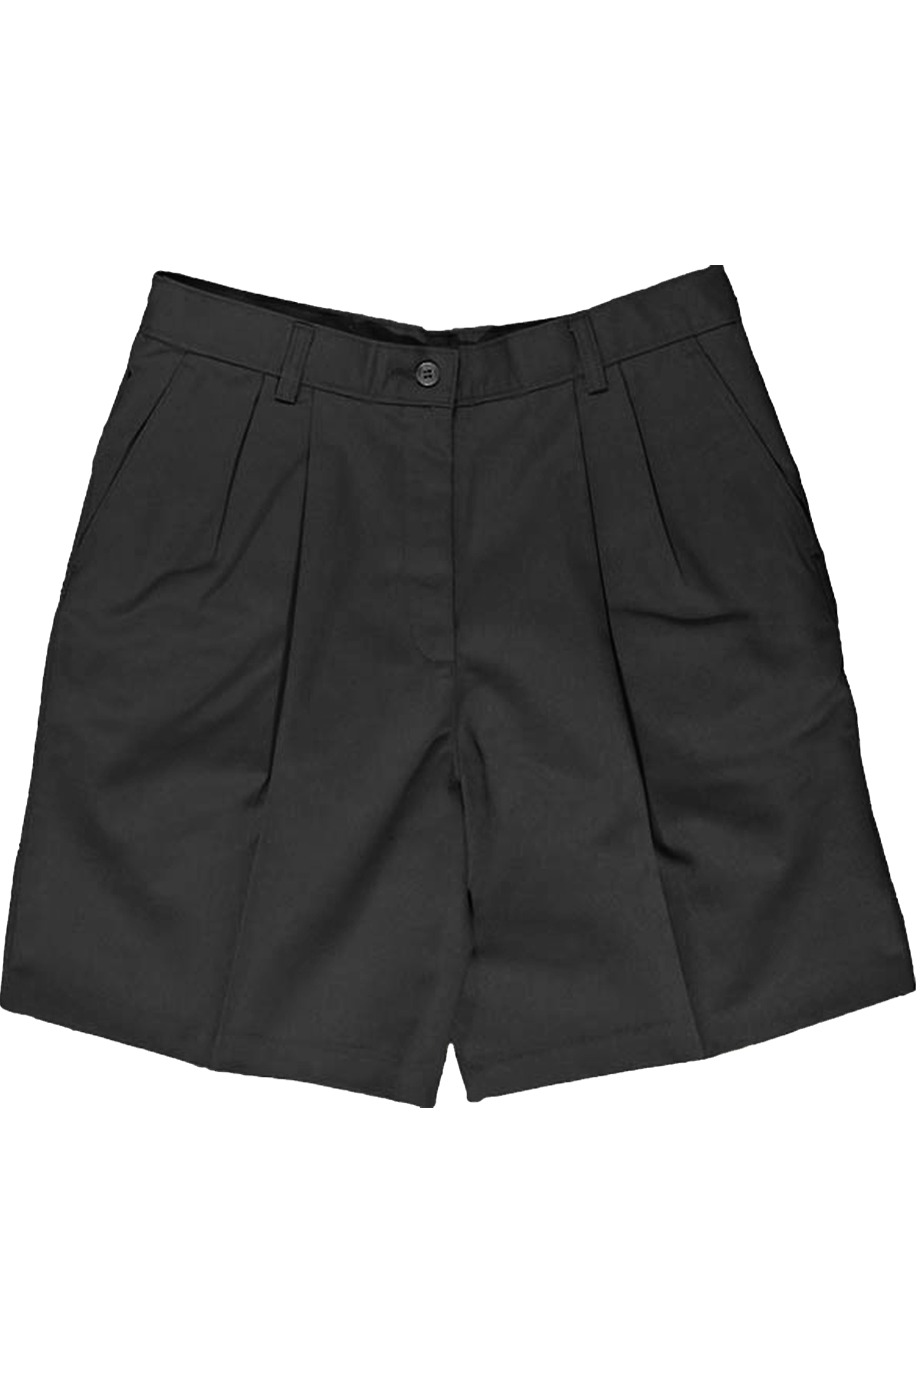 Edwards Garment 8479 - Women's Pleated Short